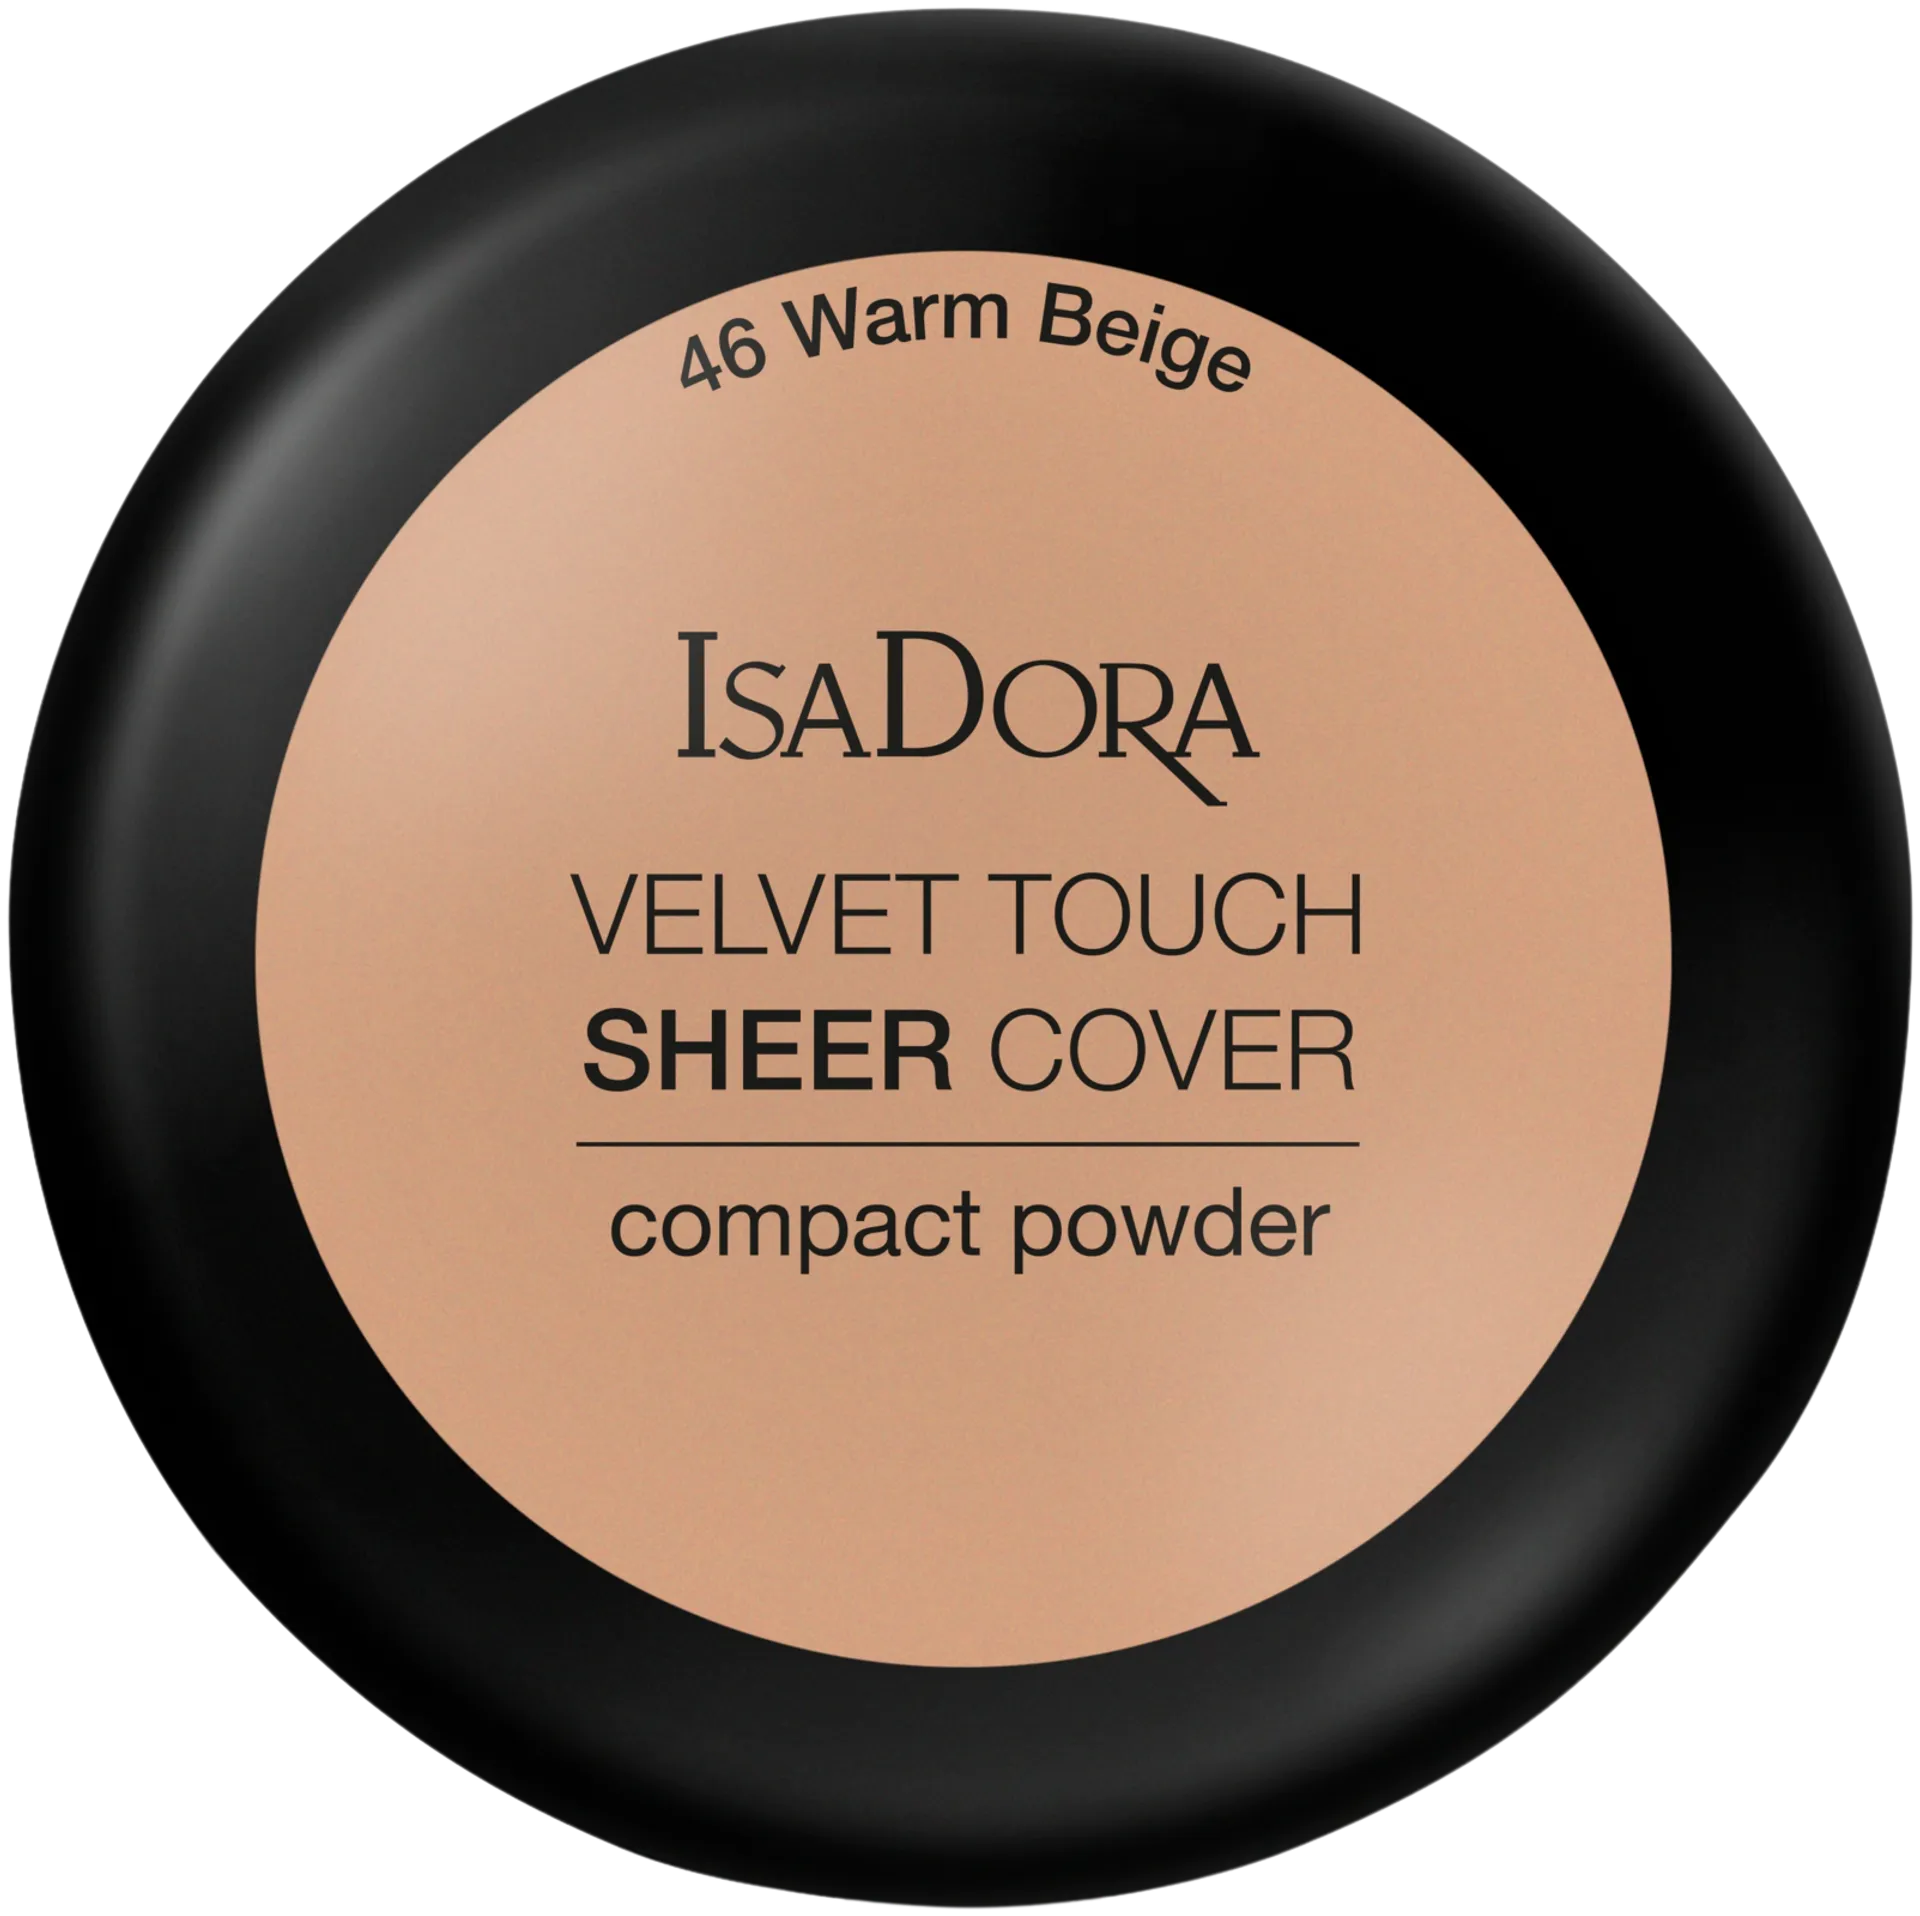 IsaDora Velvet Touch Sheer Cover Compact Powder 10 g kivipuuteri 46 Warm Beige - 2